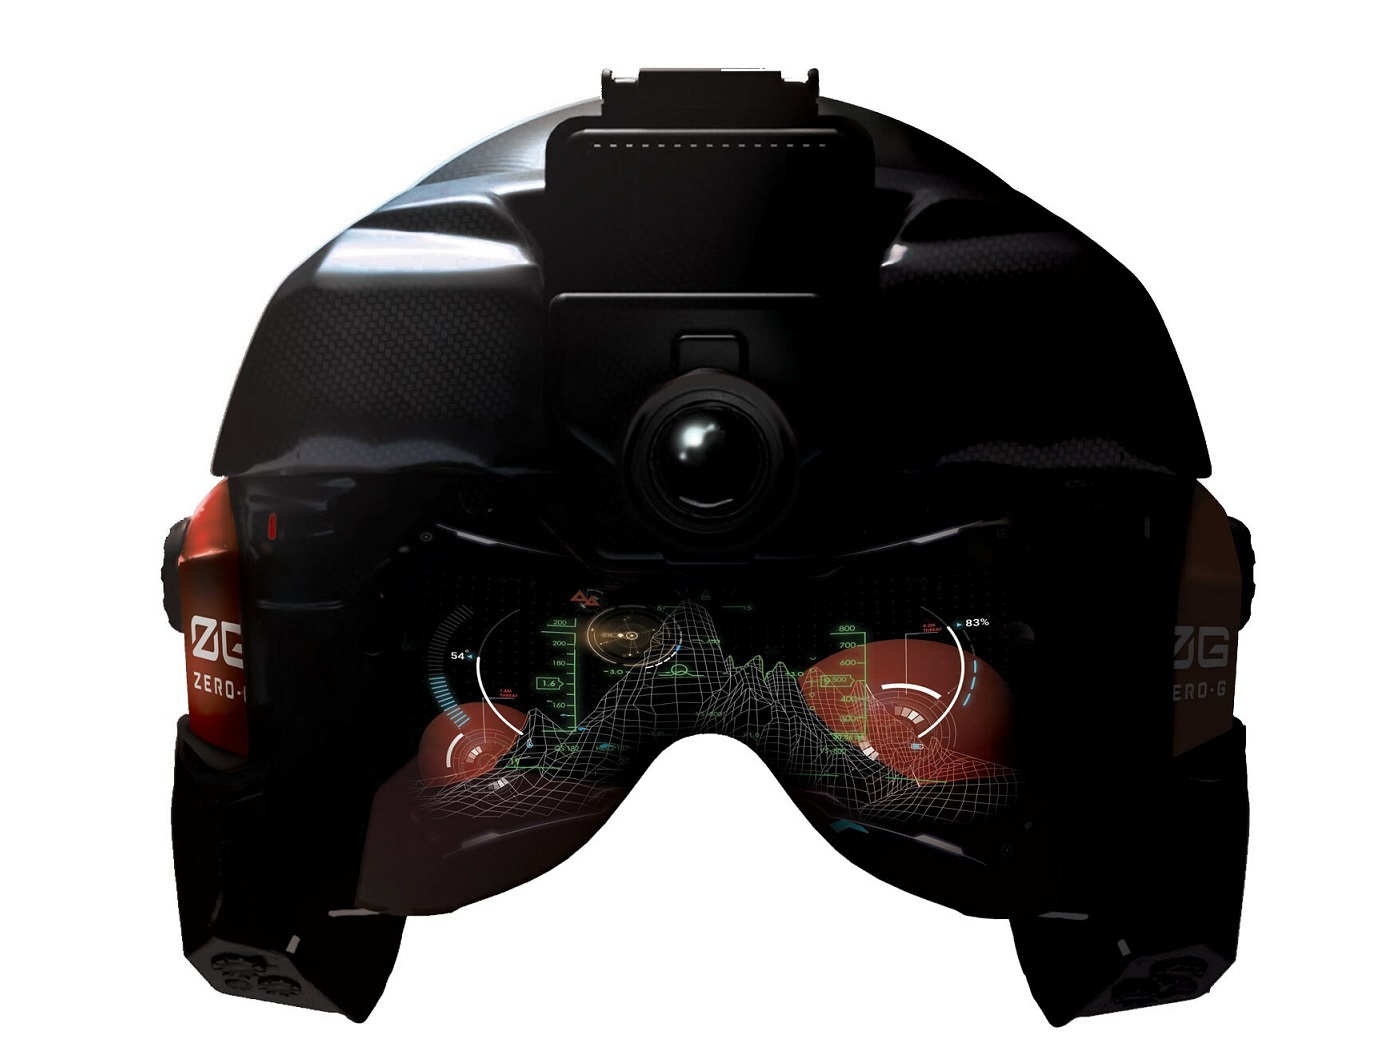 Zero-G Helmet Mounted Display System+ (HMDS+)